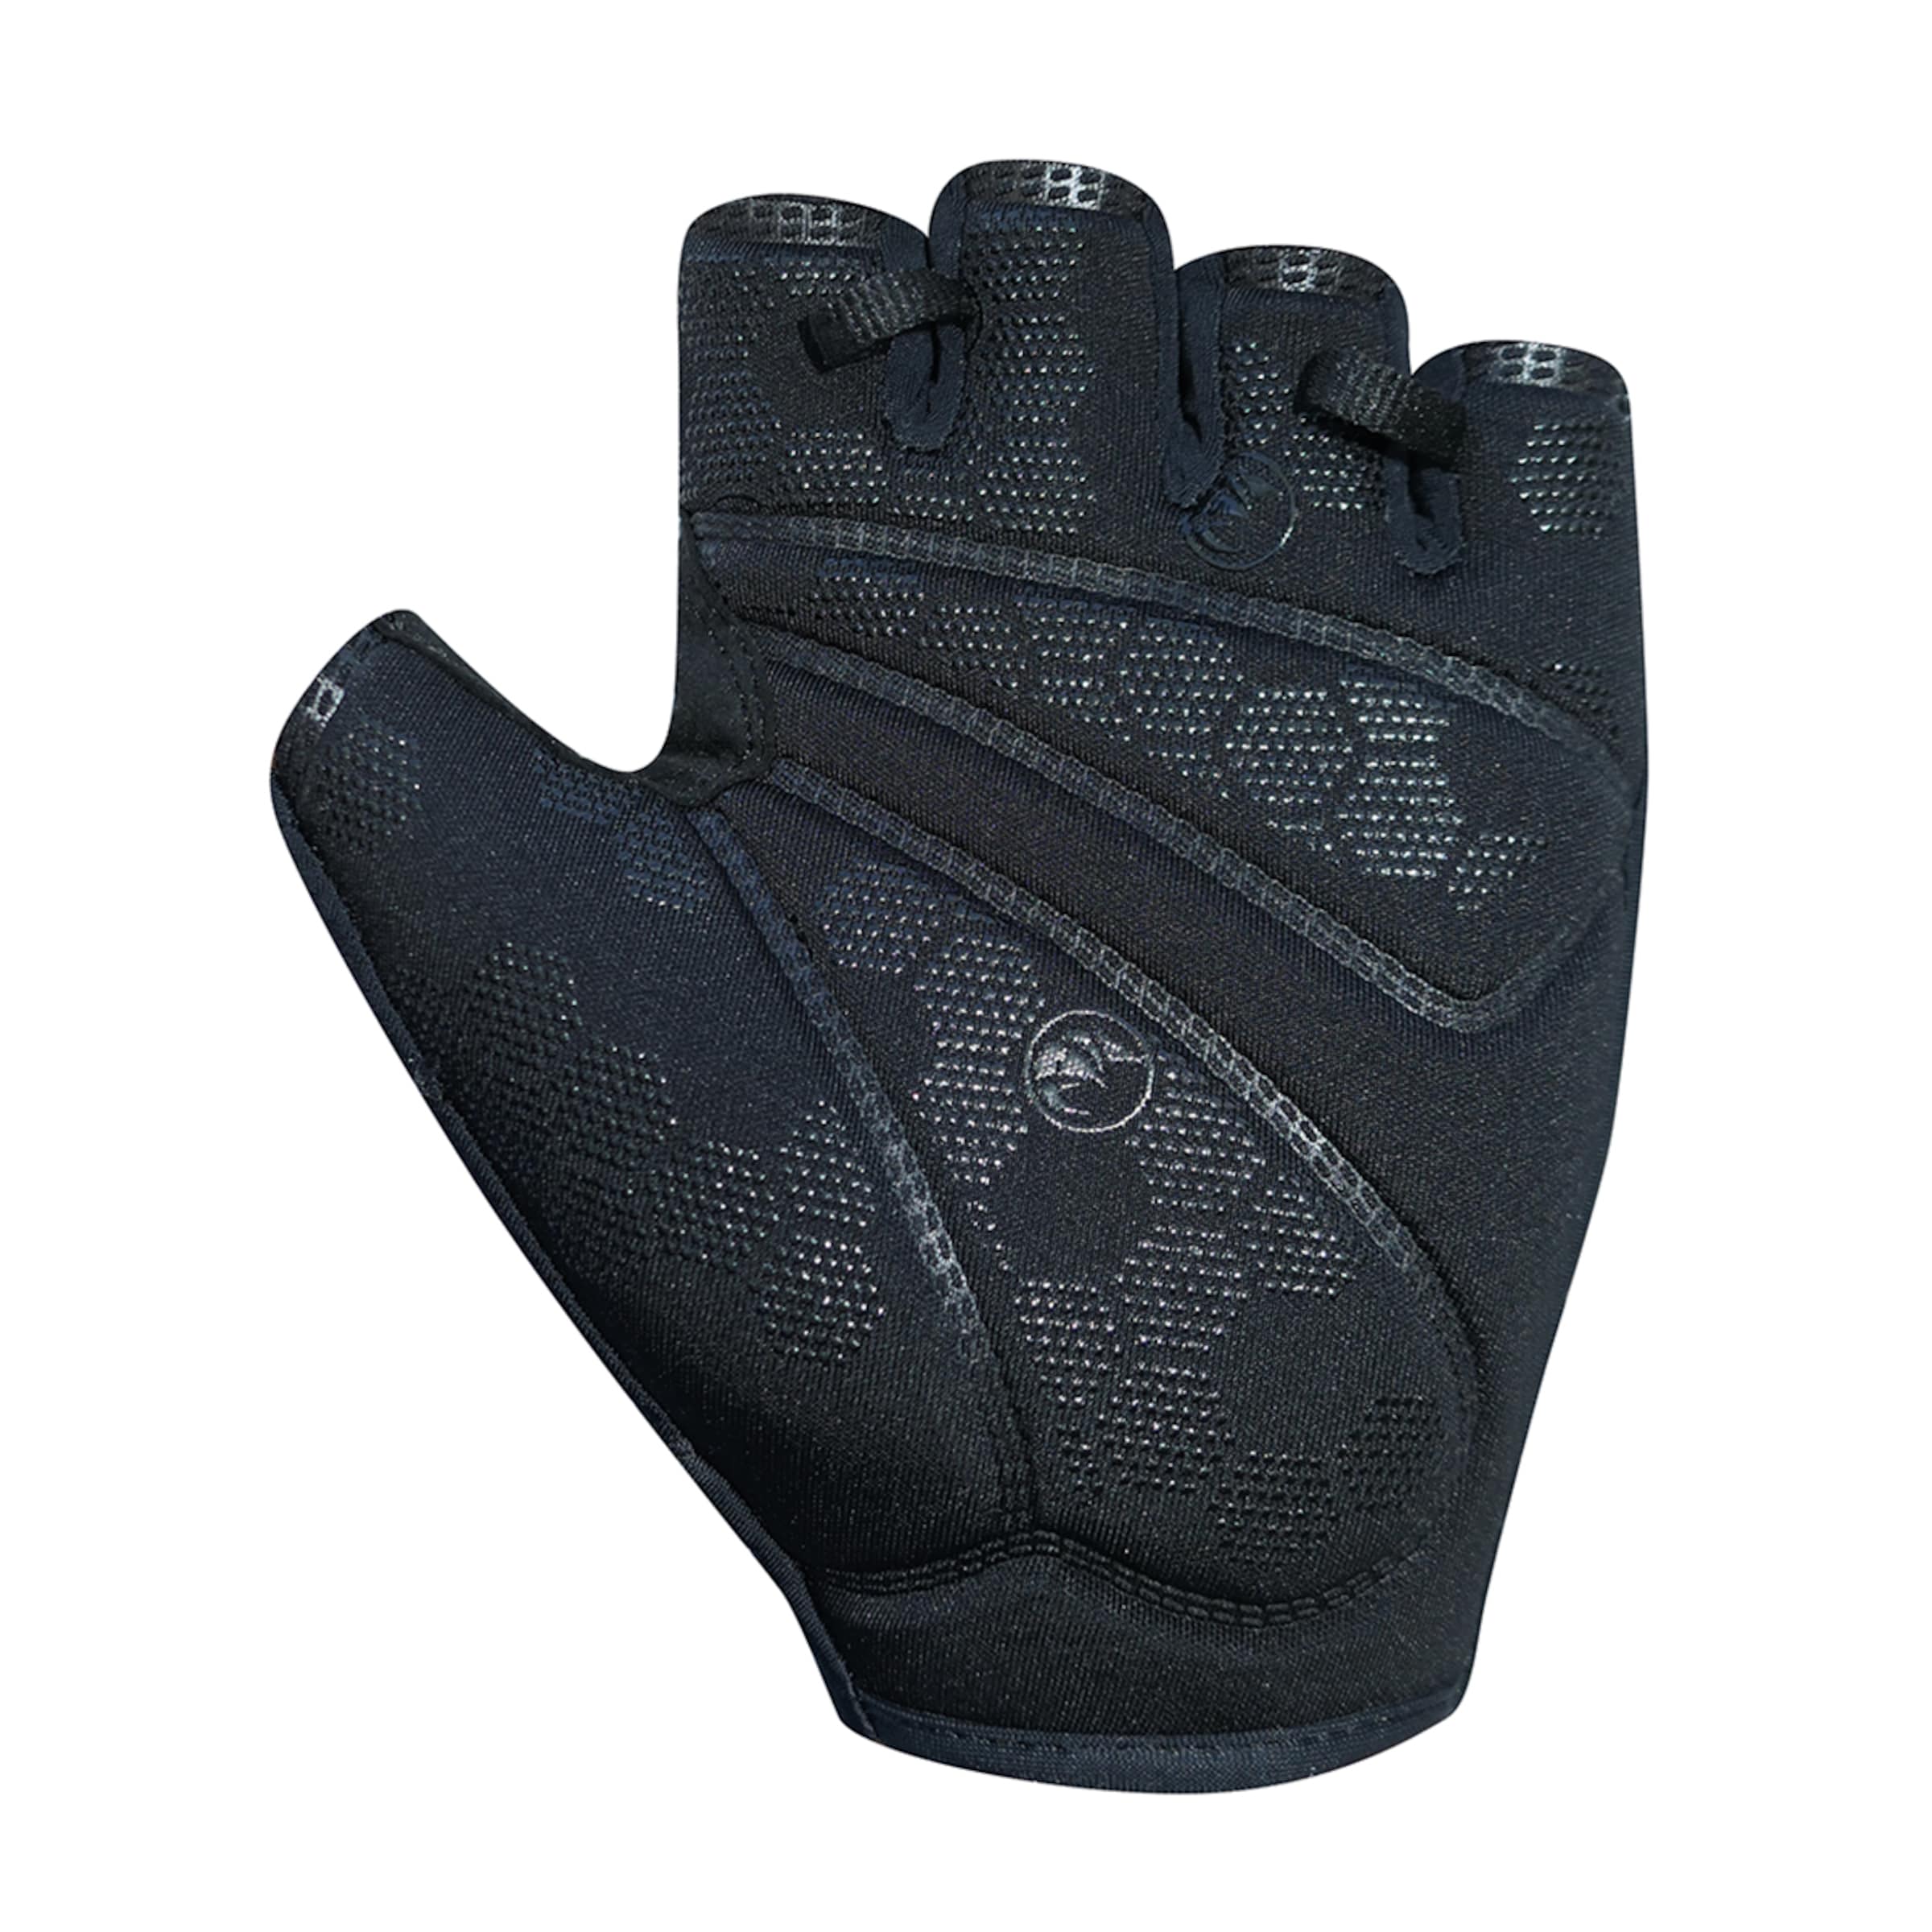 Chiba Gloves Pure Race Black